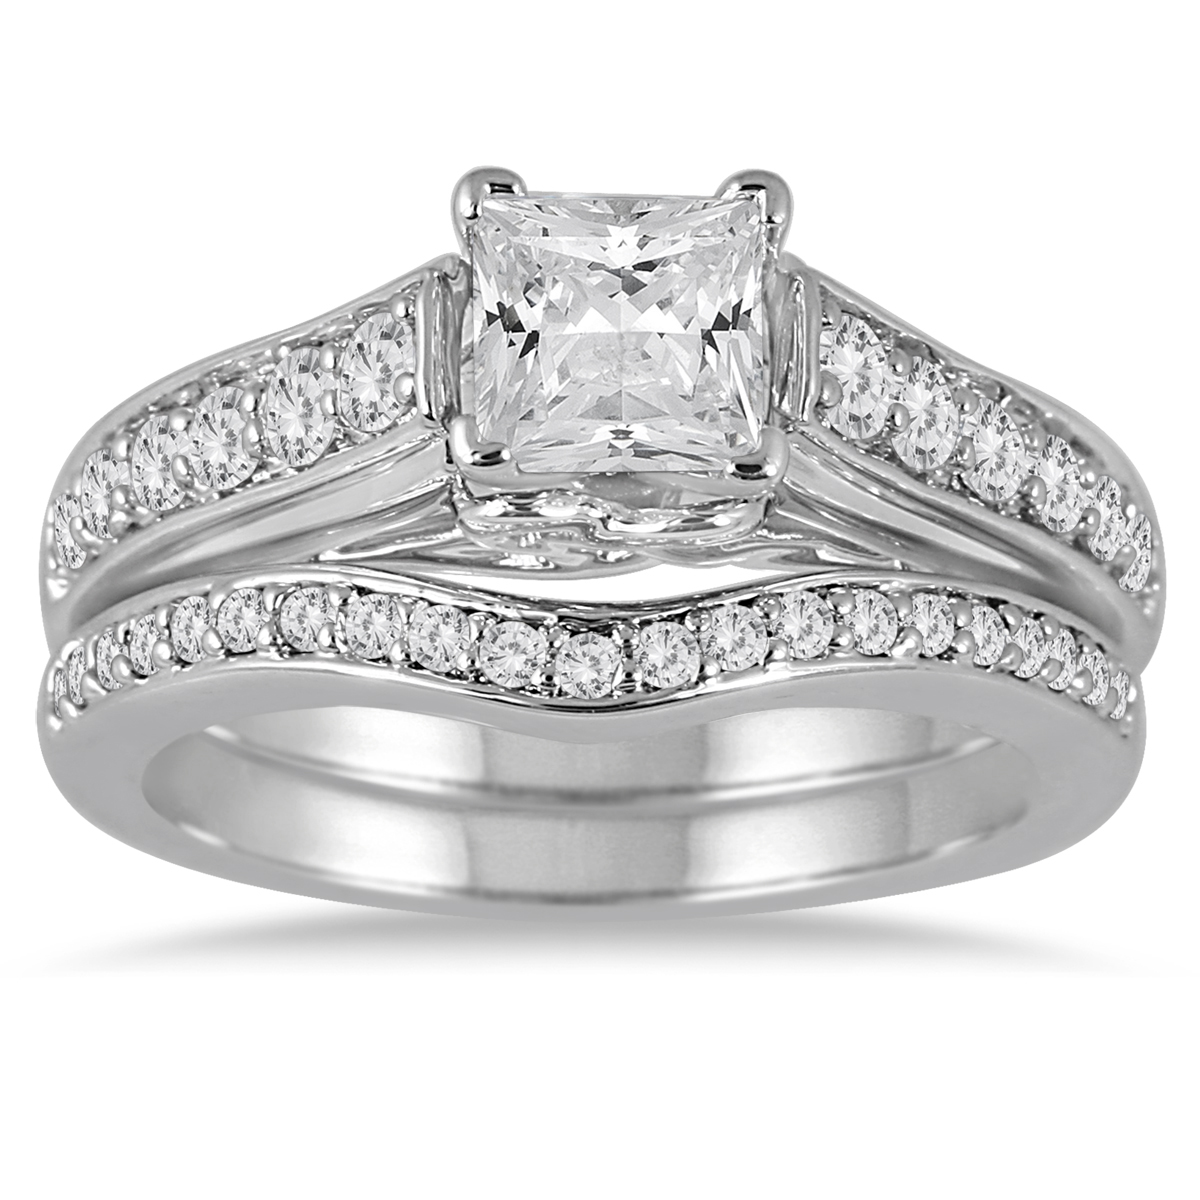 1 1/2 Carat TW Princess Diamond Bridal Set in 14K White Gold